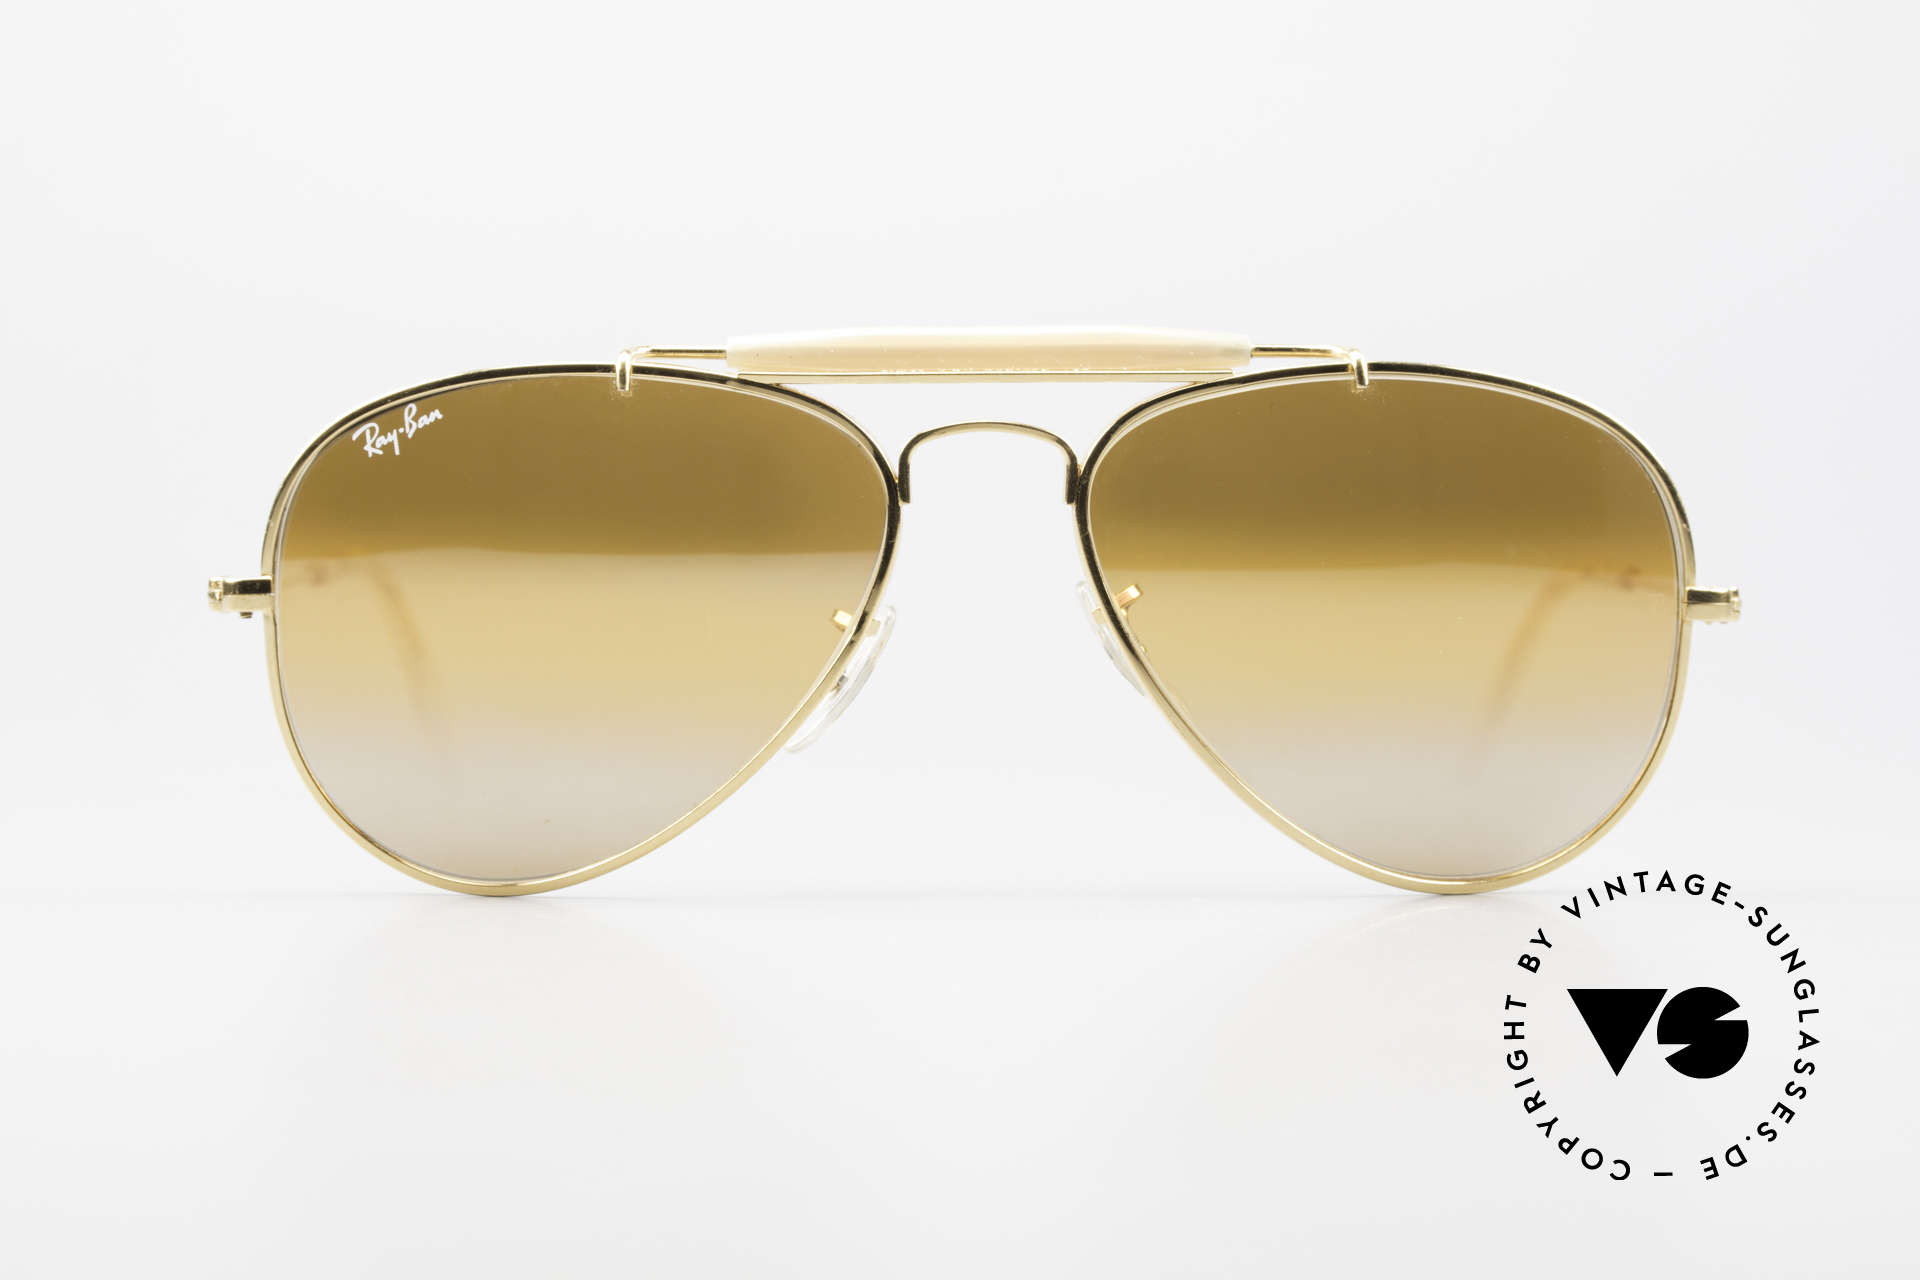 Sunglasses Ray Ban Outdoorsman 56 B&L Luxottica Italy Hybrid